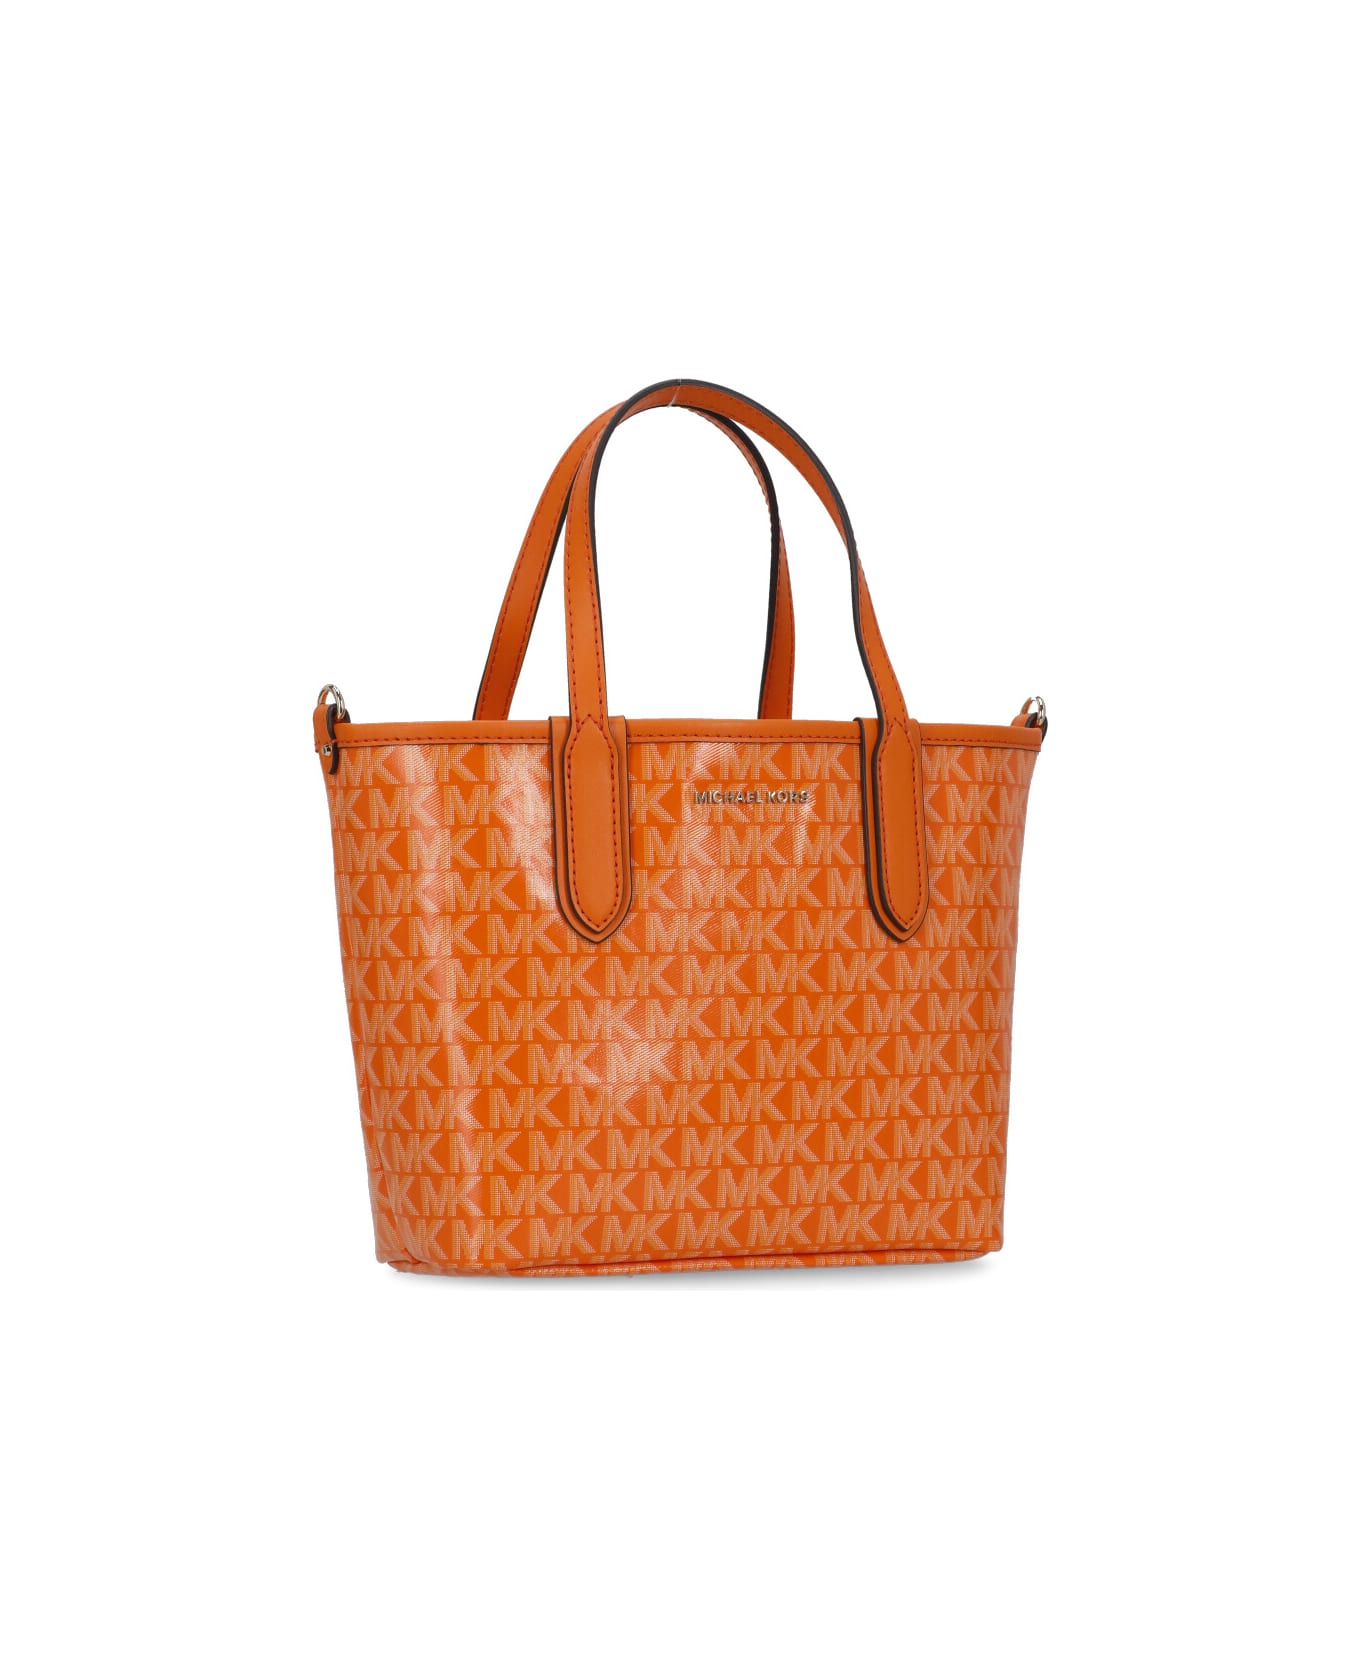 Michael Kors Eliza Hand Bag - Orange